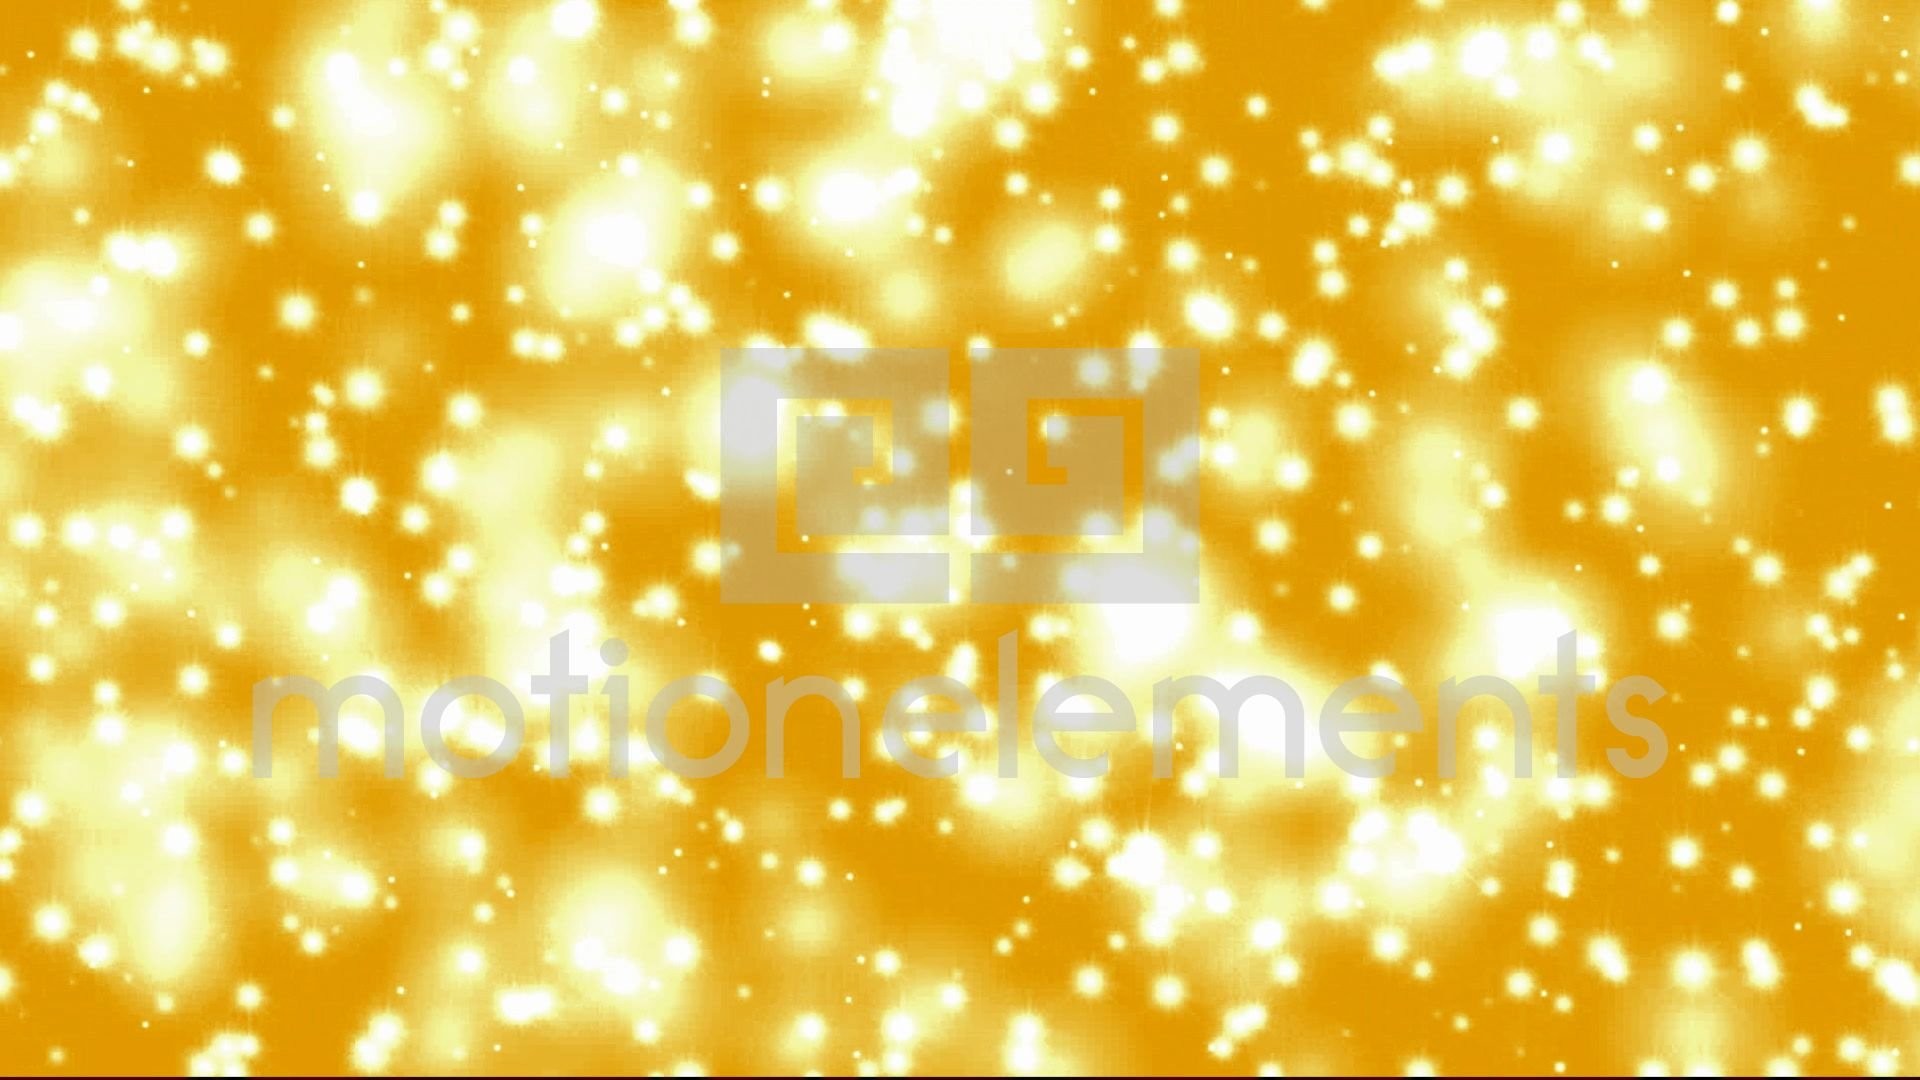 1920x1080 Glitter Gold Highlights Liquid Gleaming Dazzling Animation Stock Golden  Stars Light Media ...